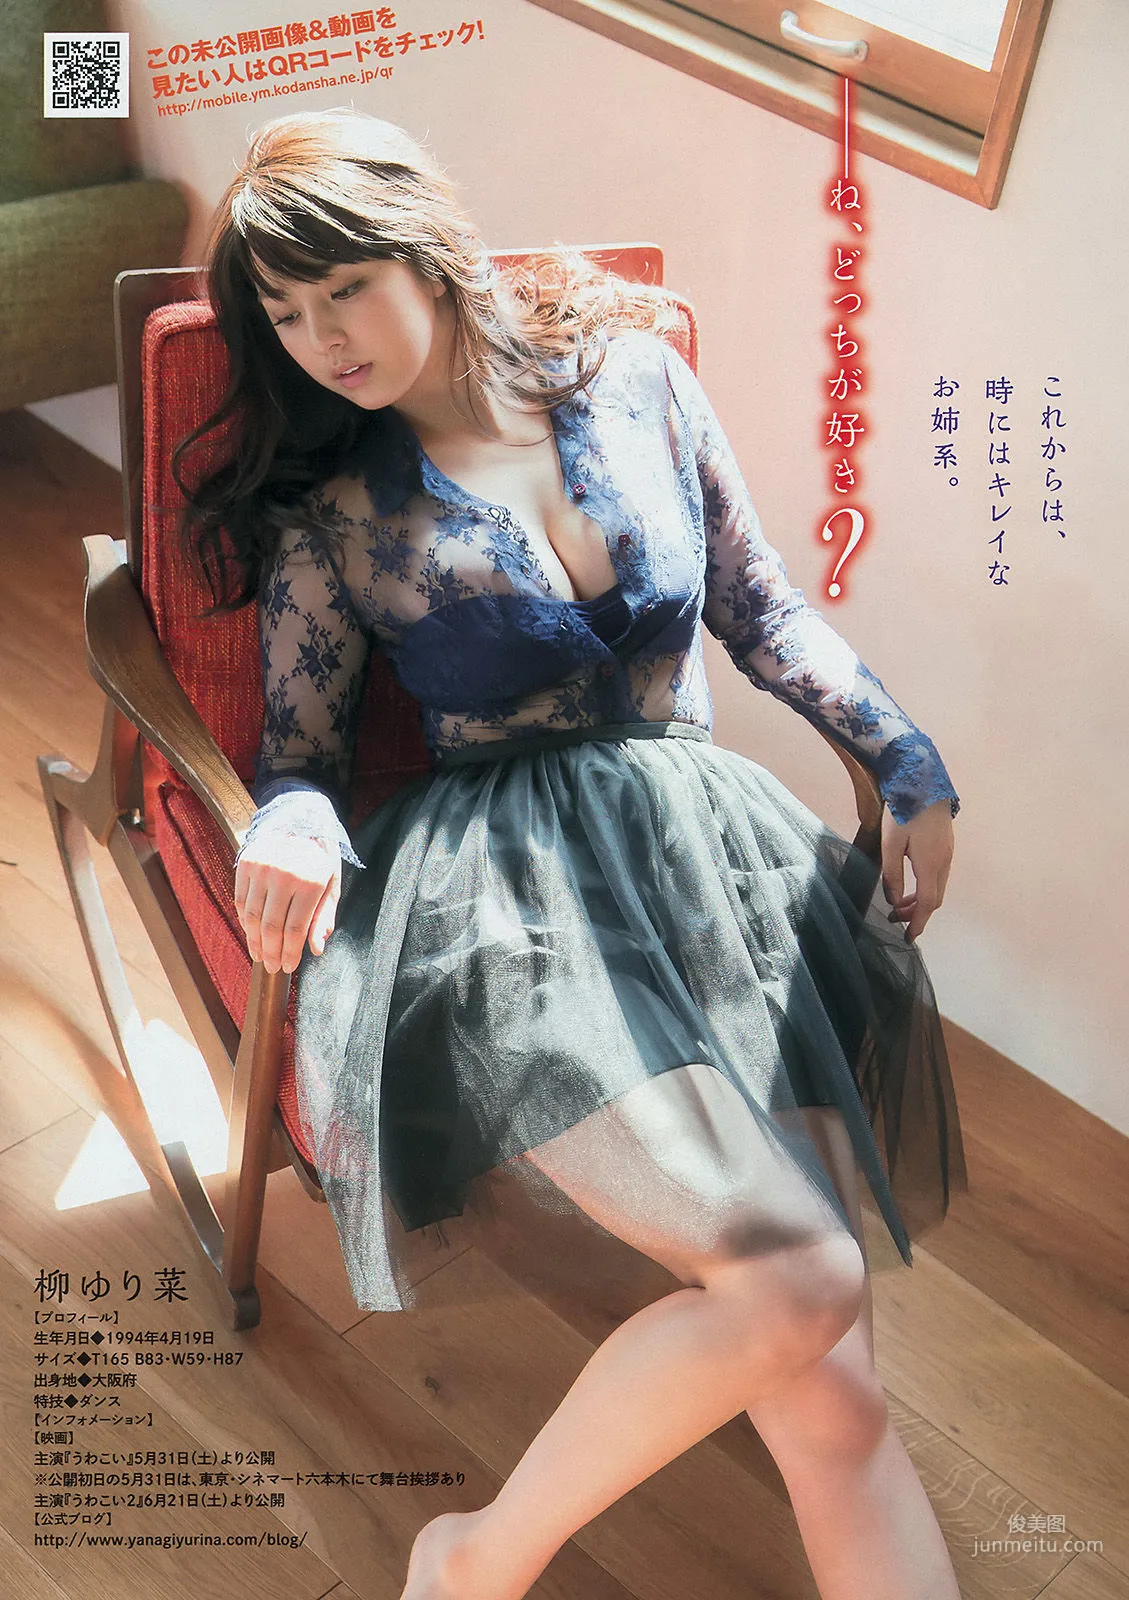 [Young Magazine] 柳ゆり菜 浜辺美波 上野優華 2014年No.24 写真杂志6